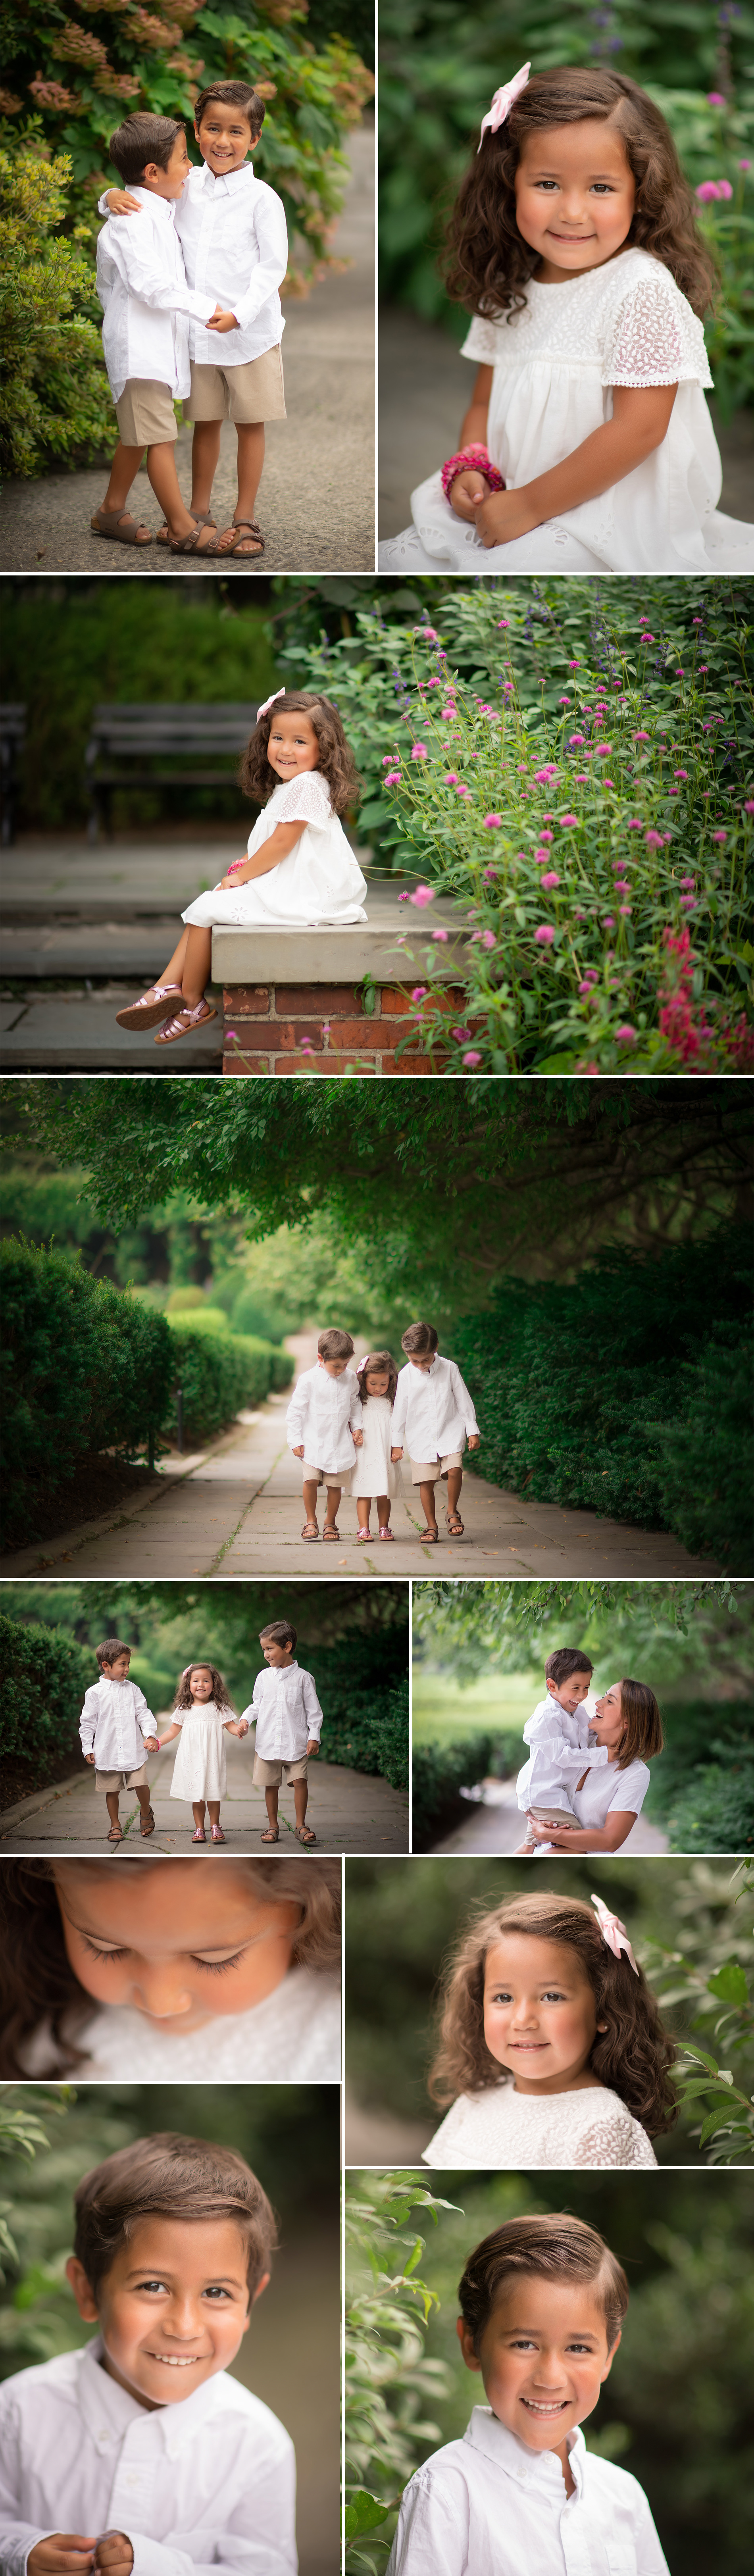 central park gardens family portrait shoot